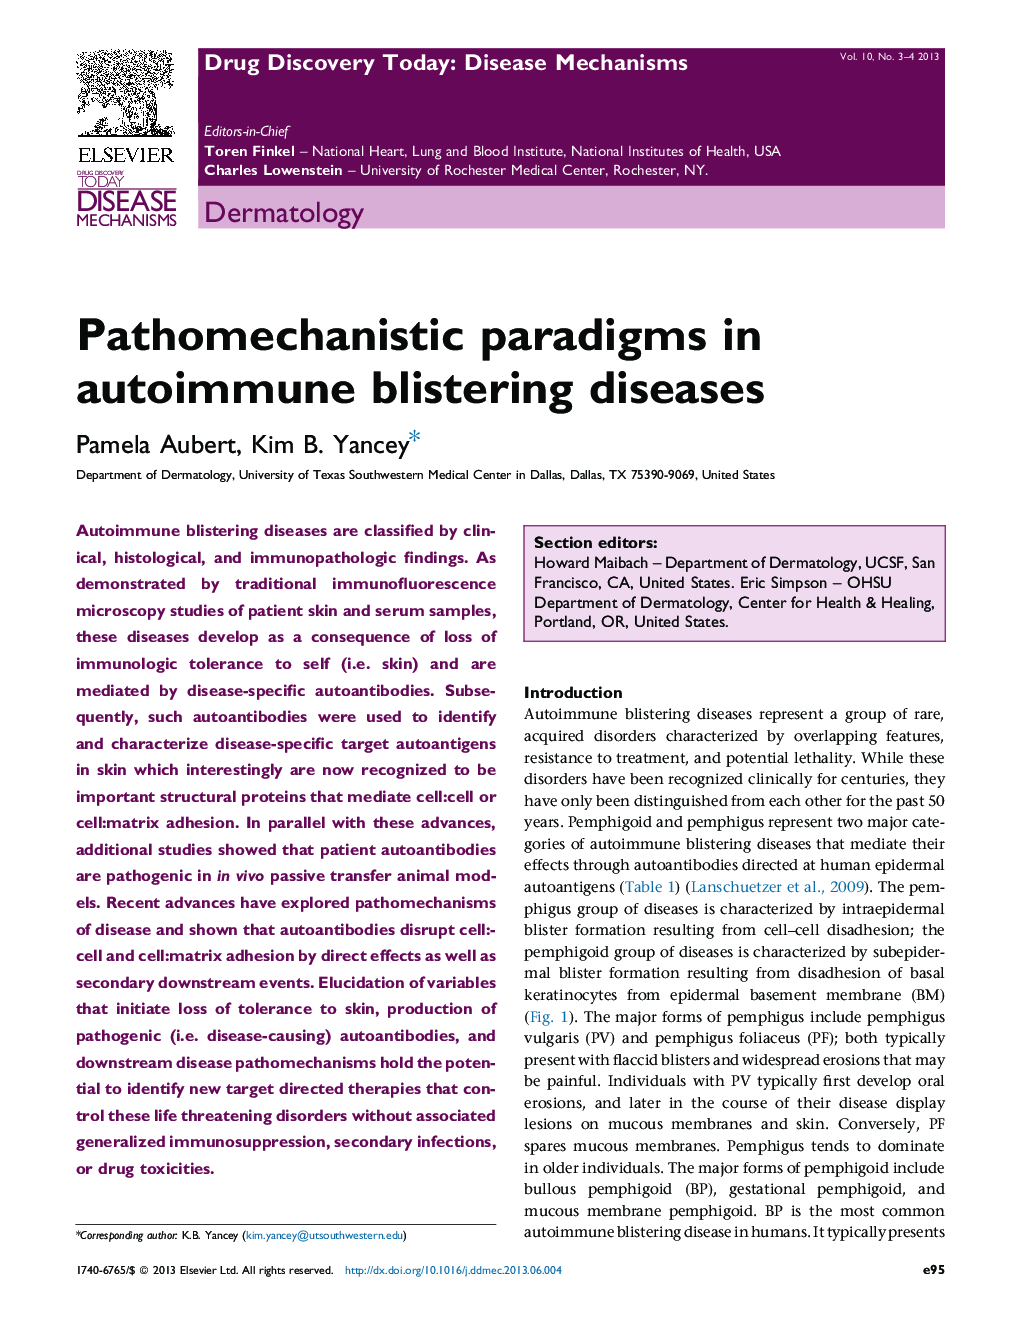 Pathomechanistic paradigms in autoimmune blistering diseases